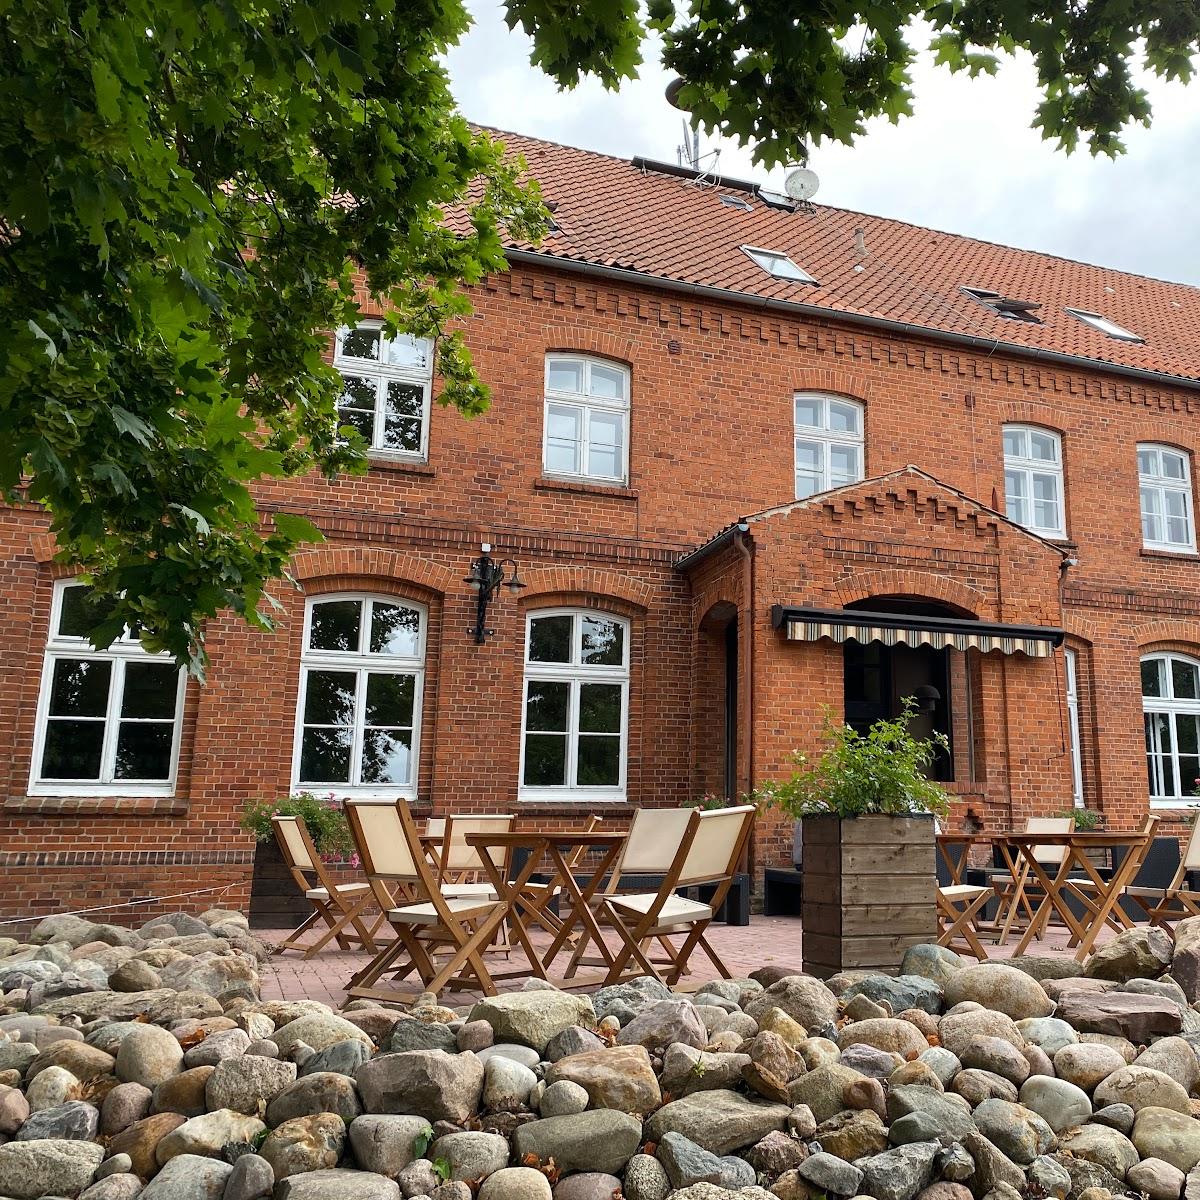 Restaurant "Alte Schule - Felicitas Jessen" in Schnackenburg